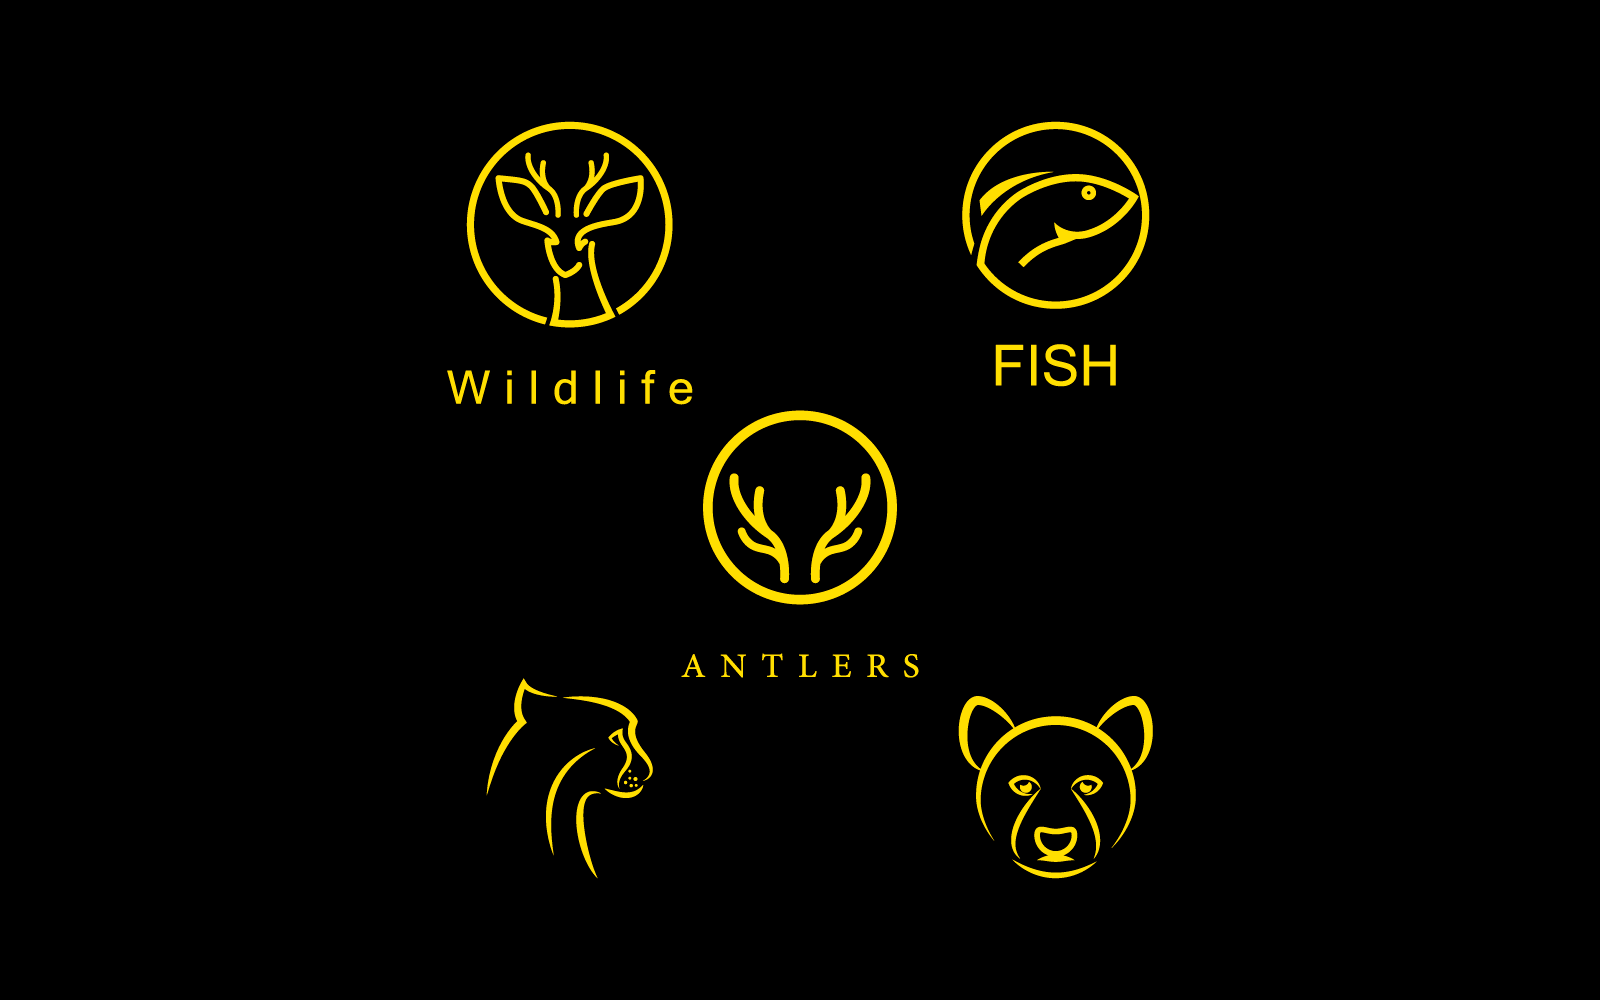 Tierwildniszoo-Illustrationslogodesign